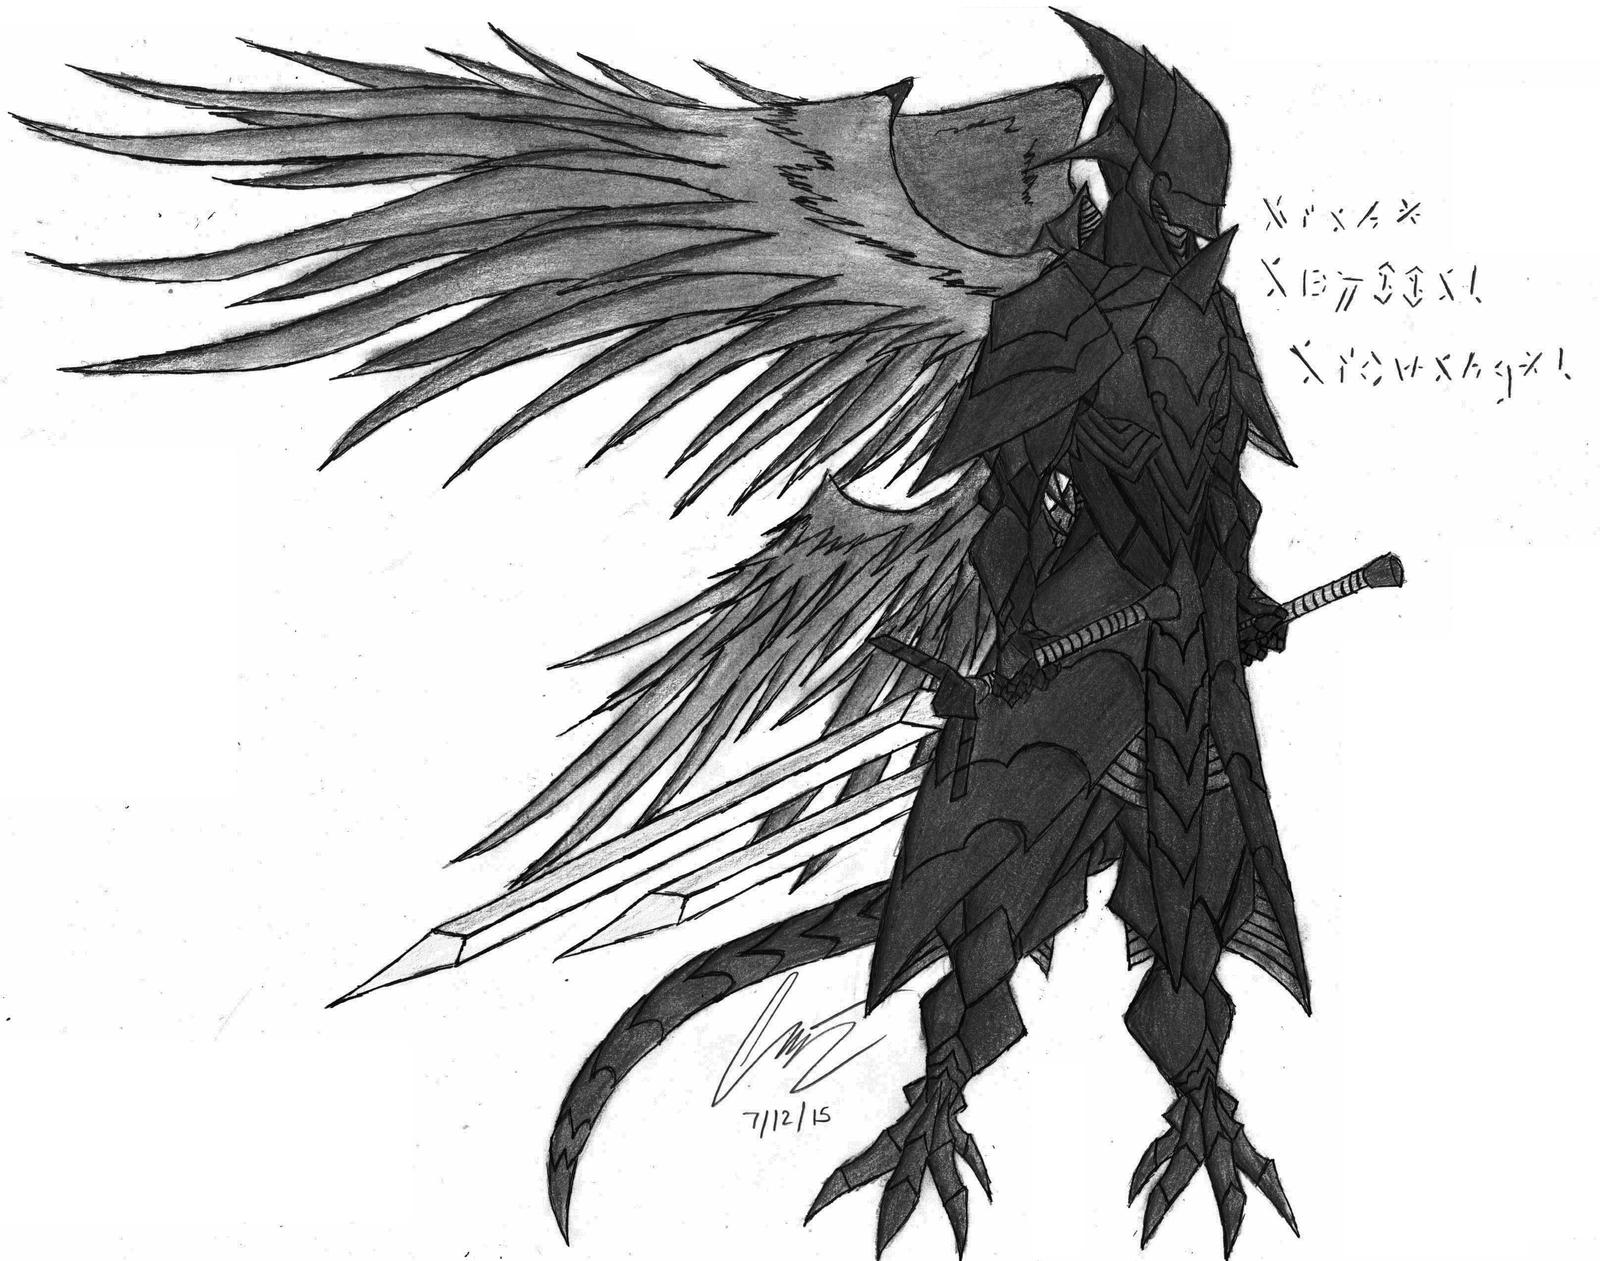 Kranx Abyssal Archangel